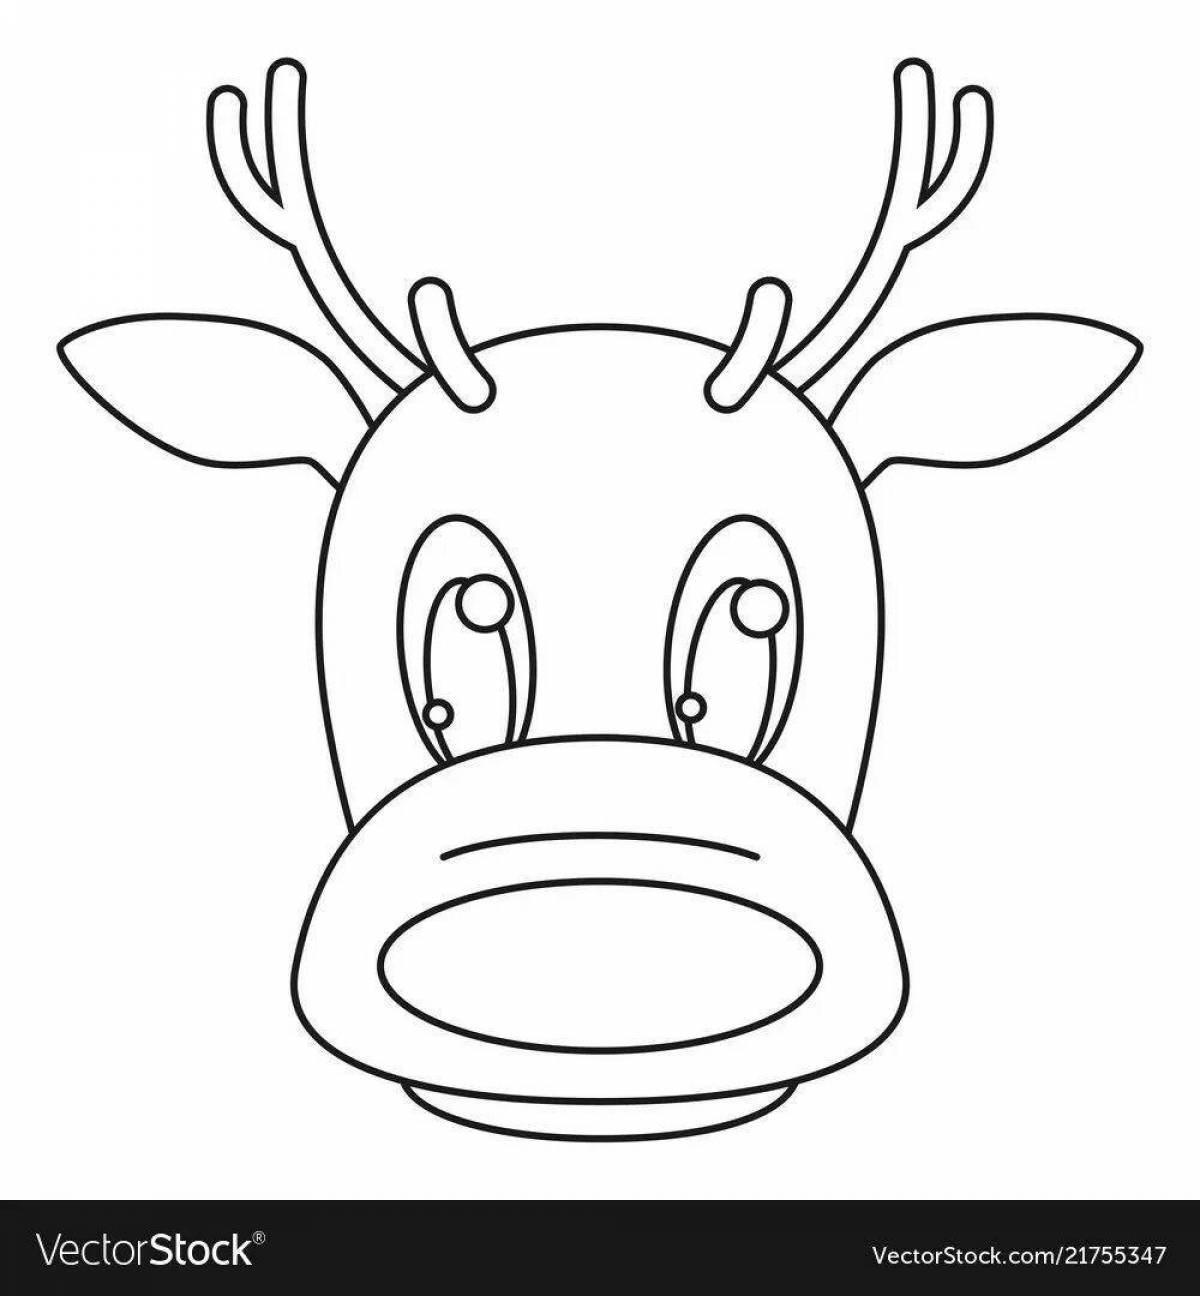 Great deer head coloring book